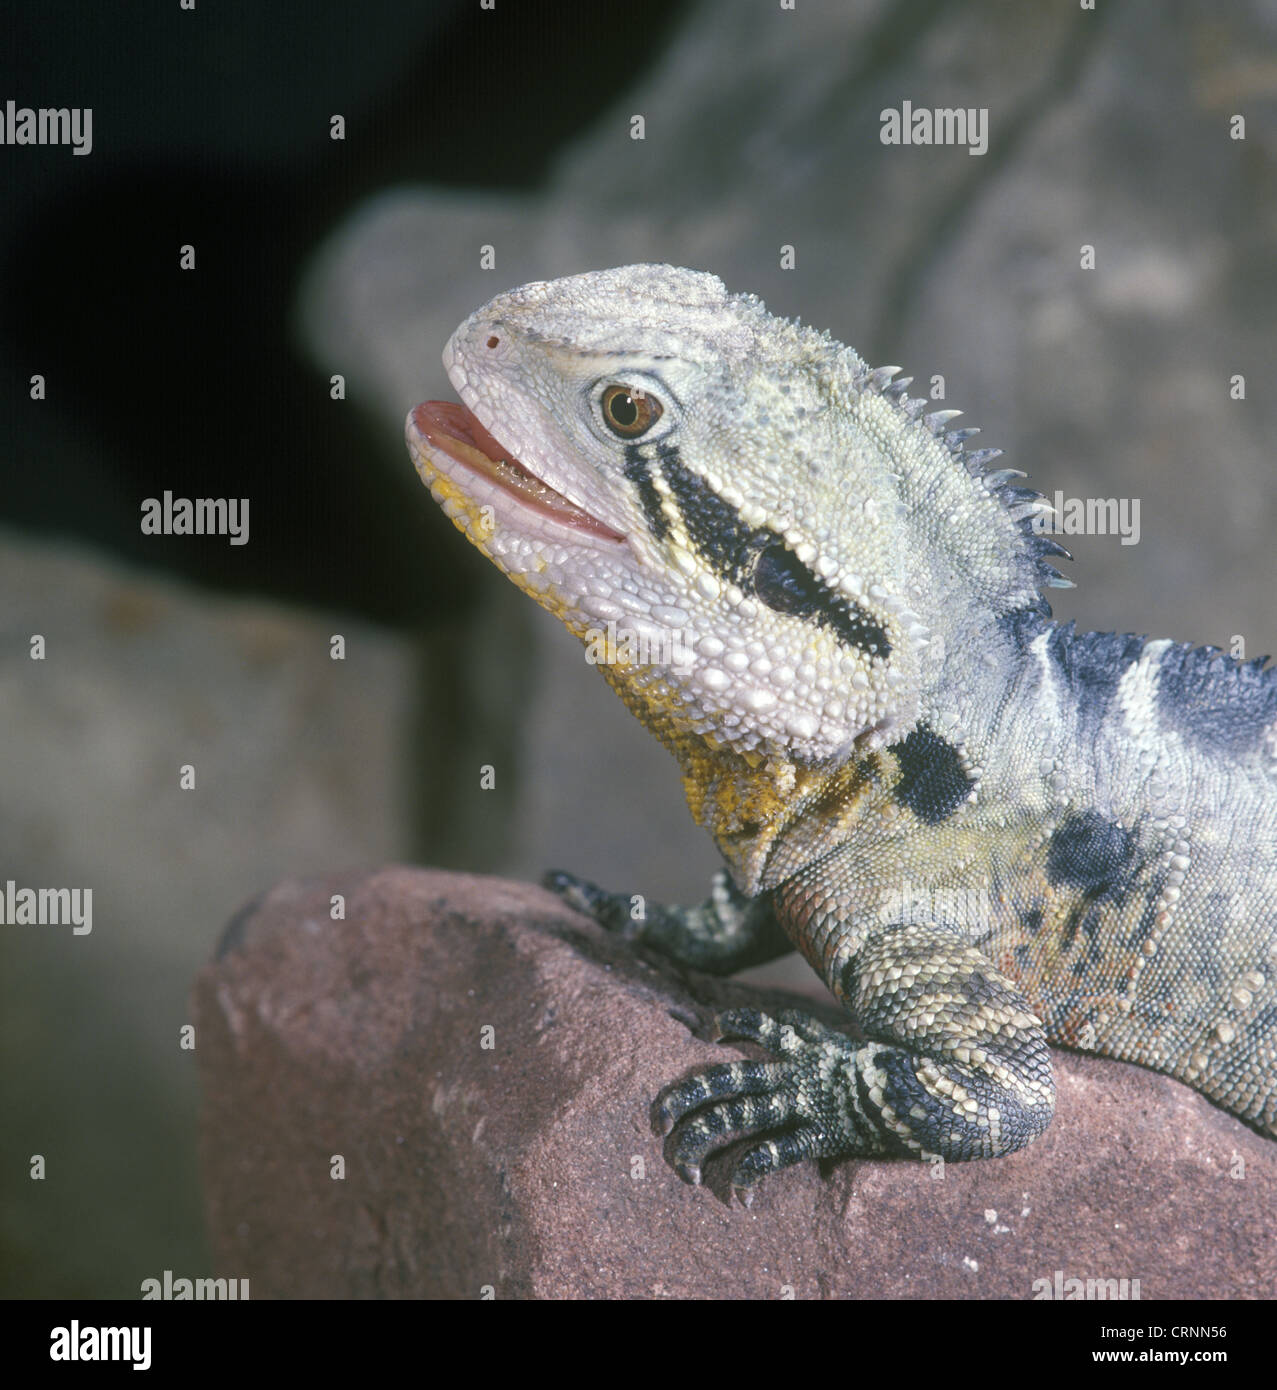 Acqua orientale Dragon (Physignathus lesuerii) piedi anteriori sul rock / close up Foto Stock